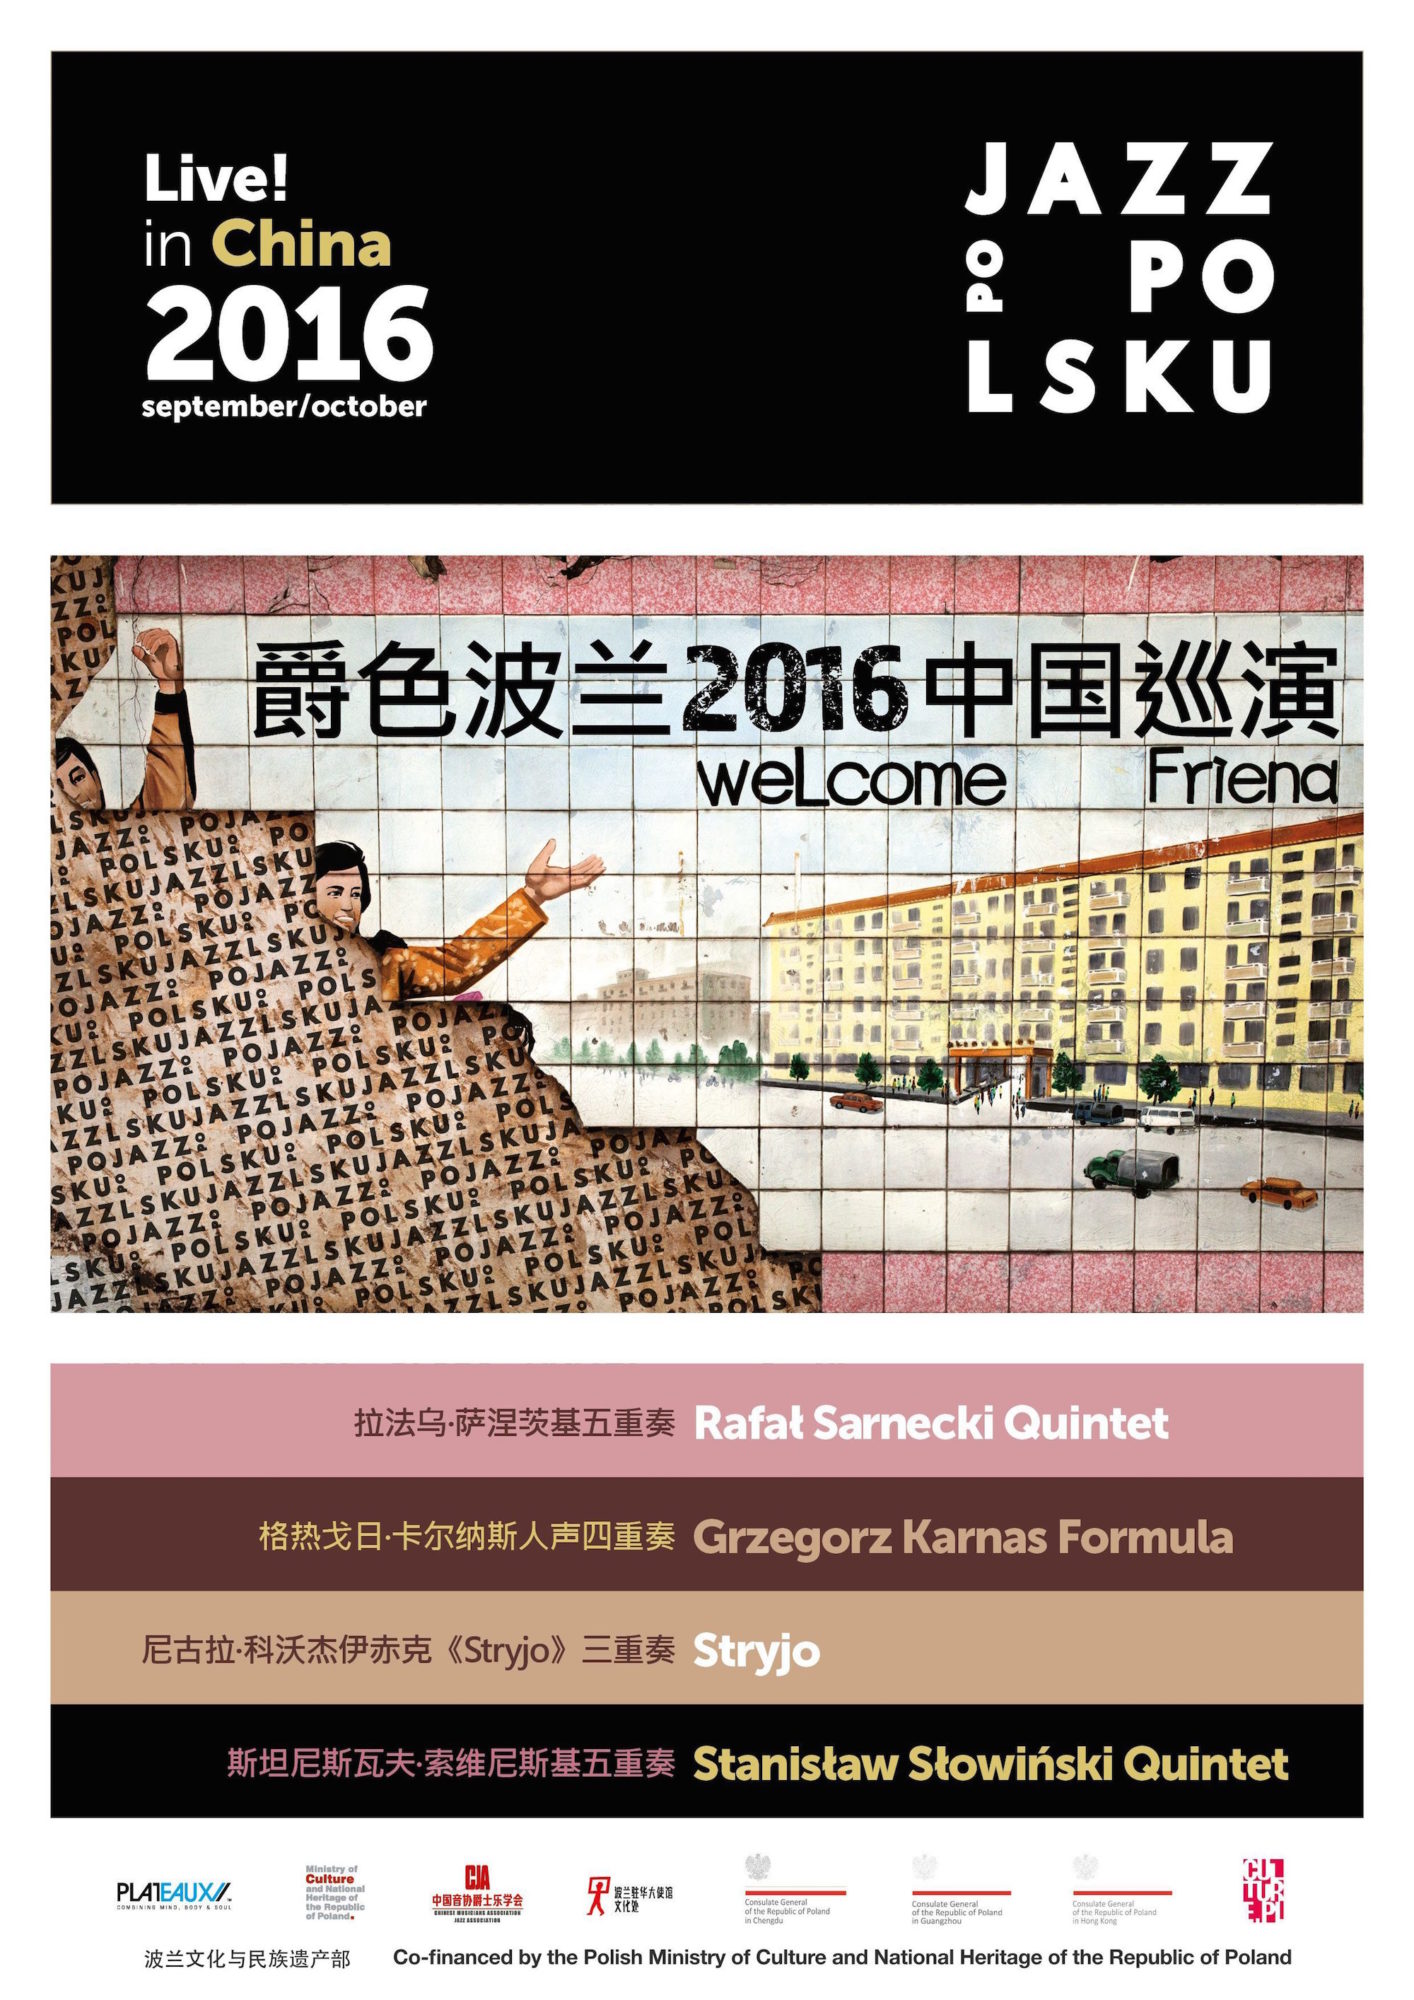 final_jazzpopolsku_liveinchina2016_poster_a2_150dpi-kopia